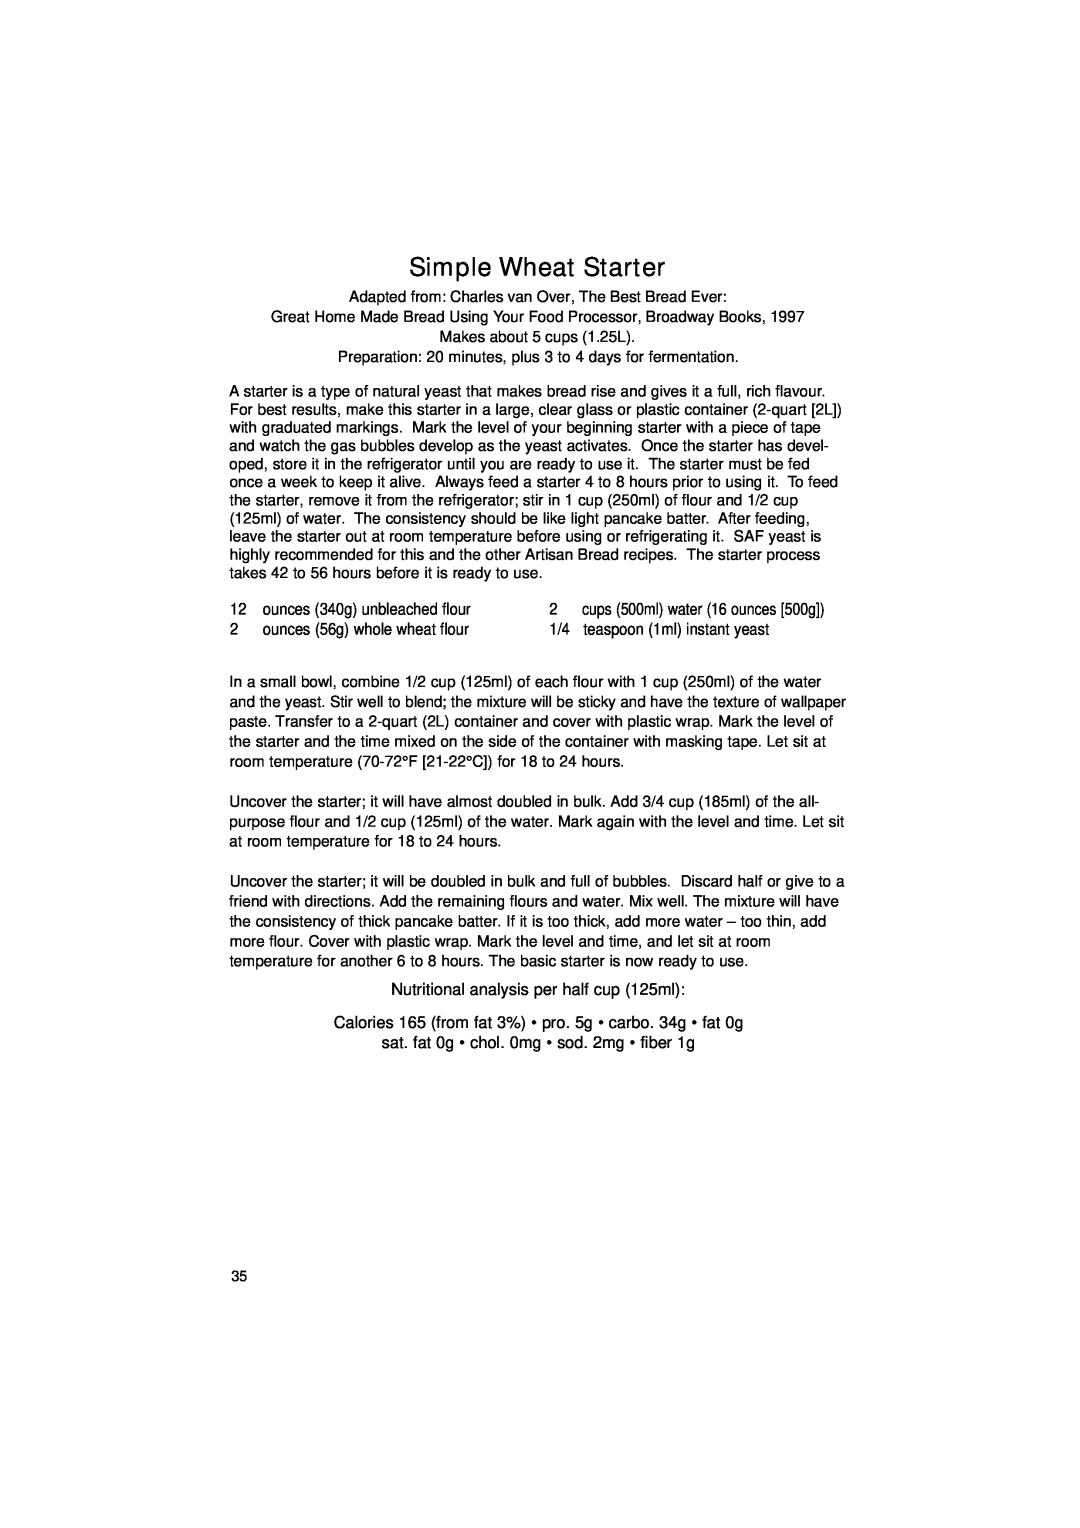 Cuisinart DLC-2011C manual Simple Wheat Starter, ounces 340g unbleached flour, ounces 56g whole wheat flour 